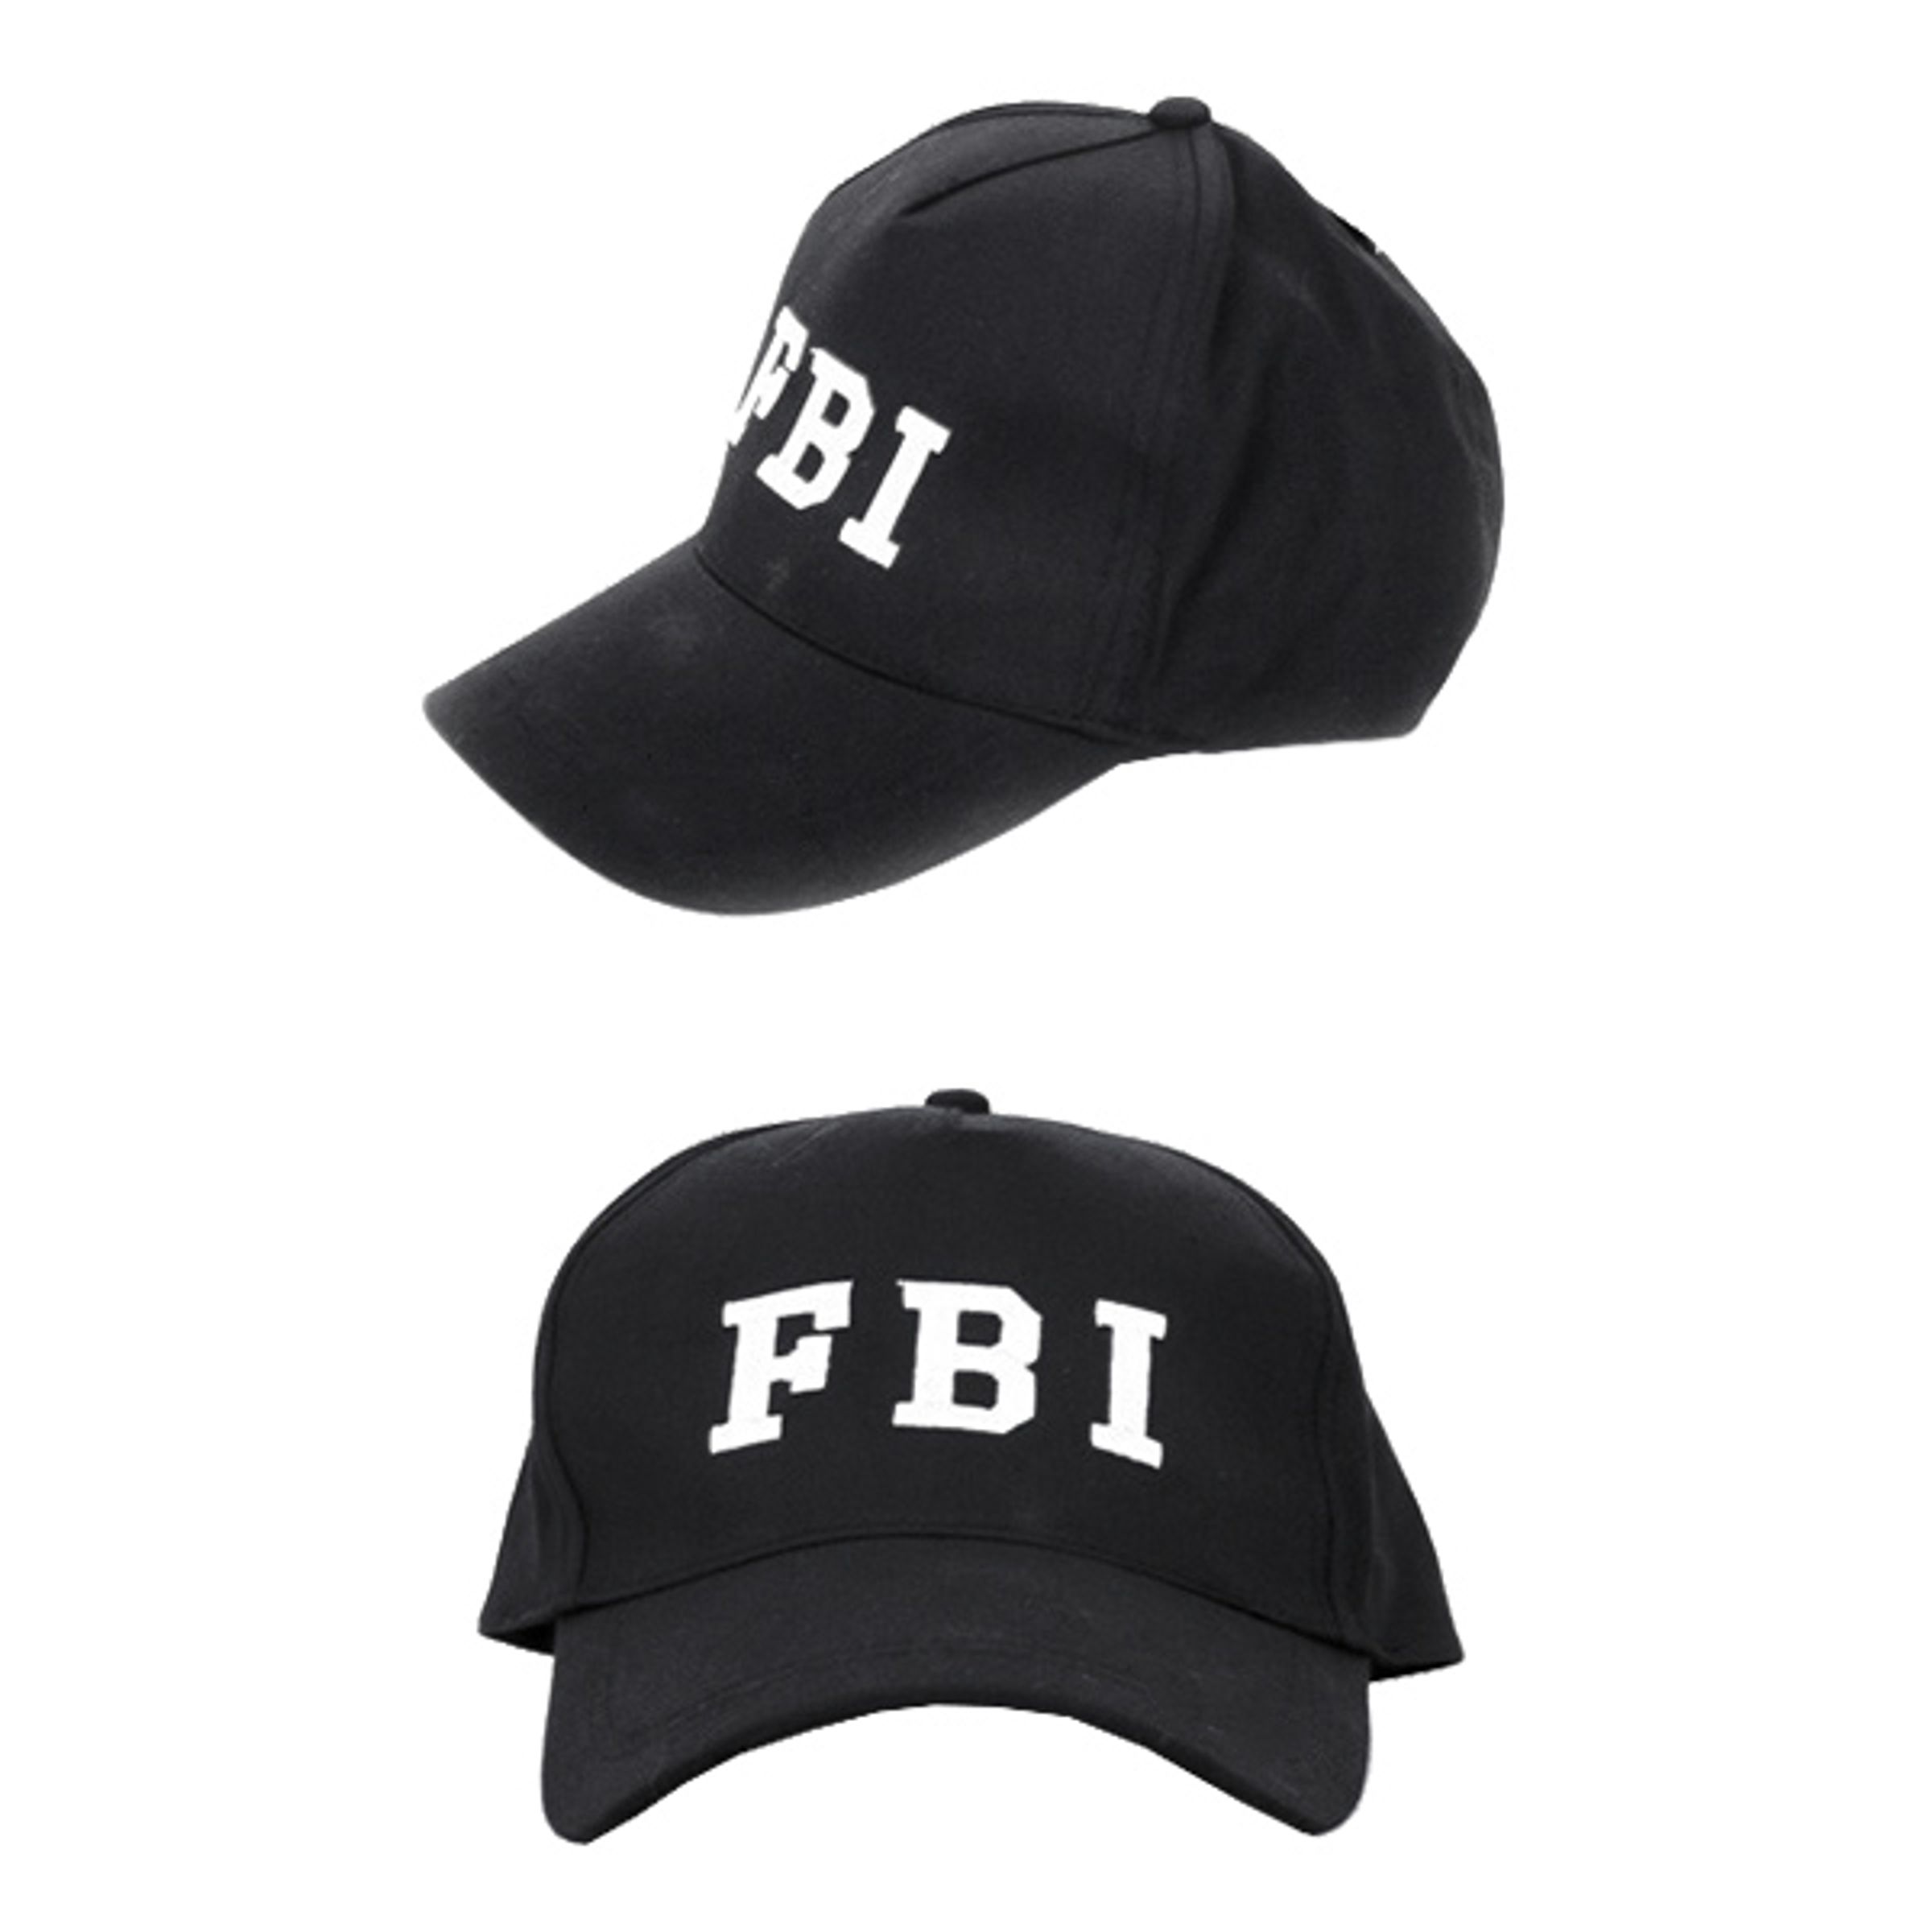 FBI-Keps - One size